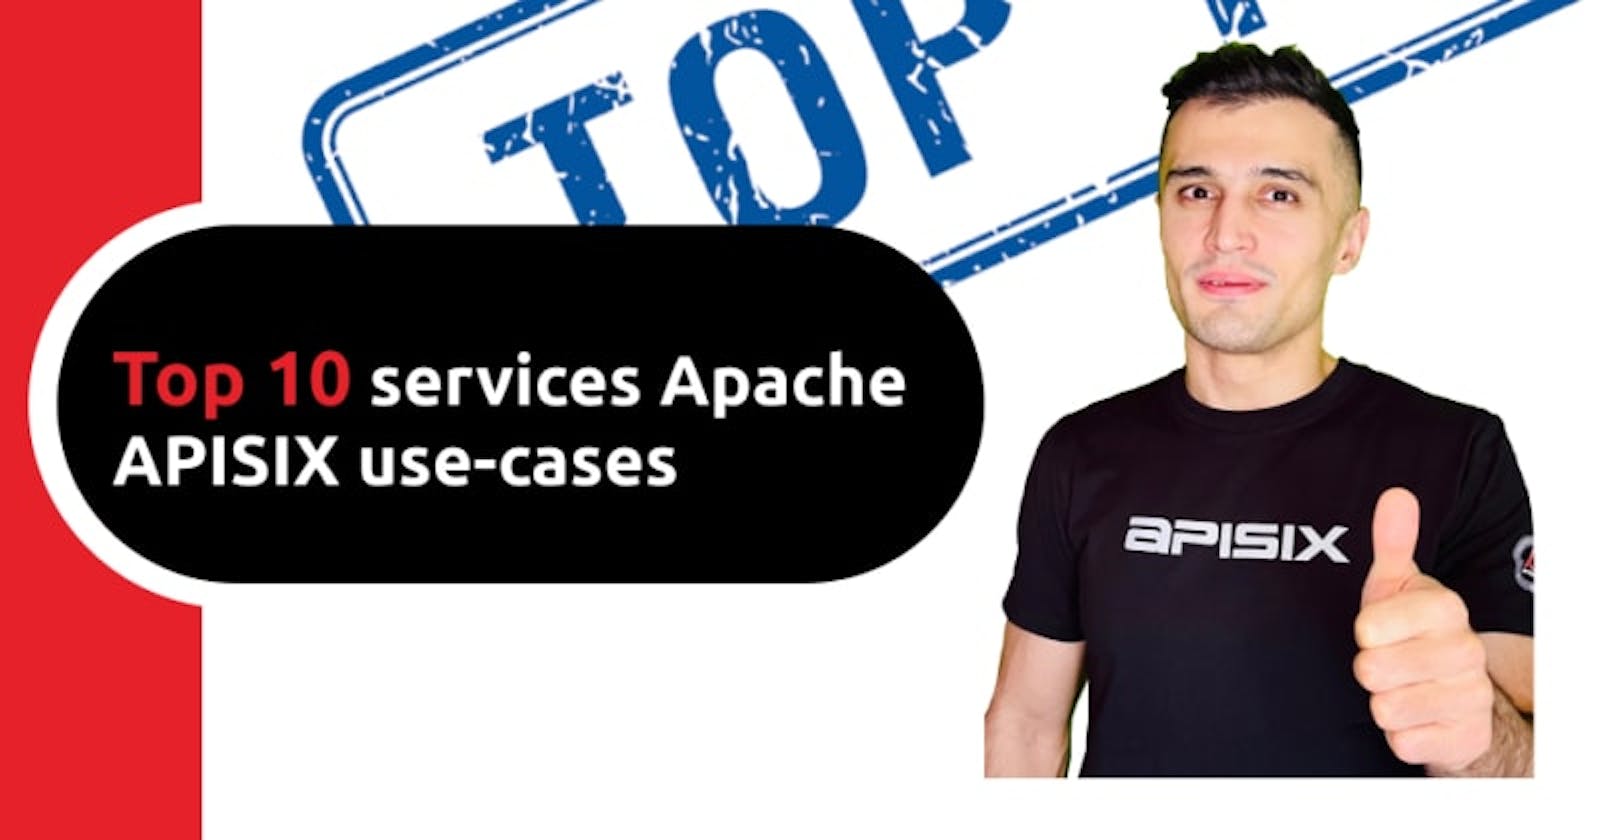 Top 10 services Apache APISIX use-cases